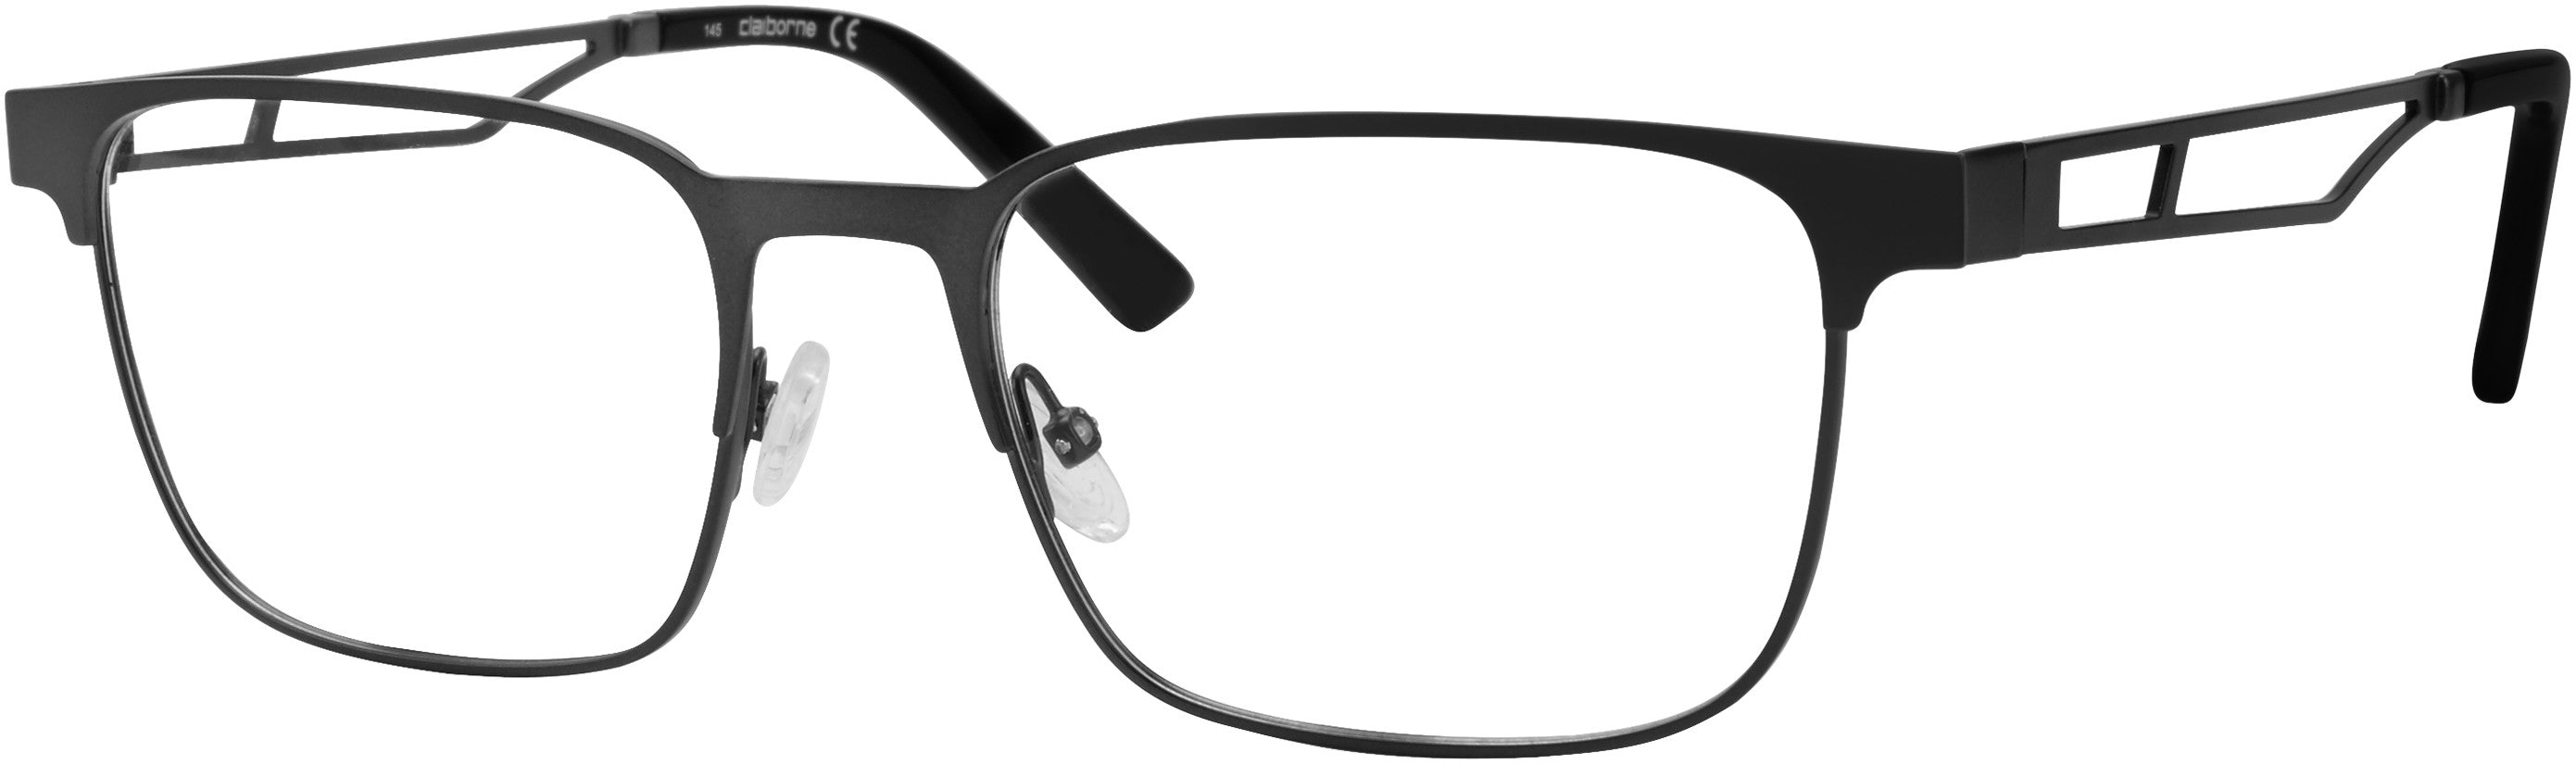  Claiborne 243 Square Eyeglasses 06LB-06LB  Ruthenium (00 Demo Lens)